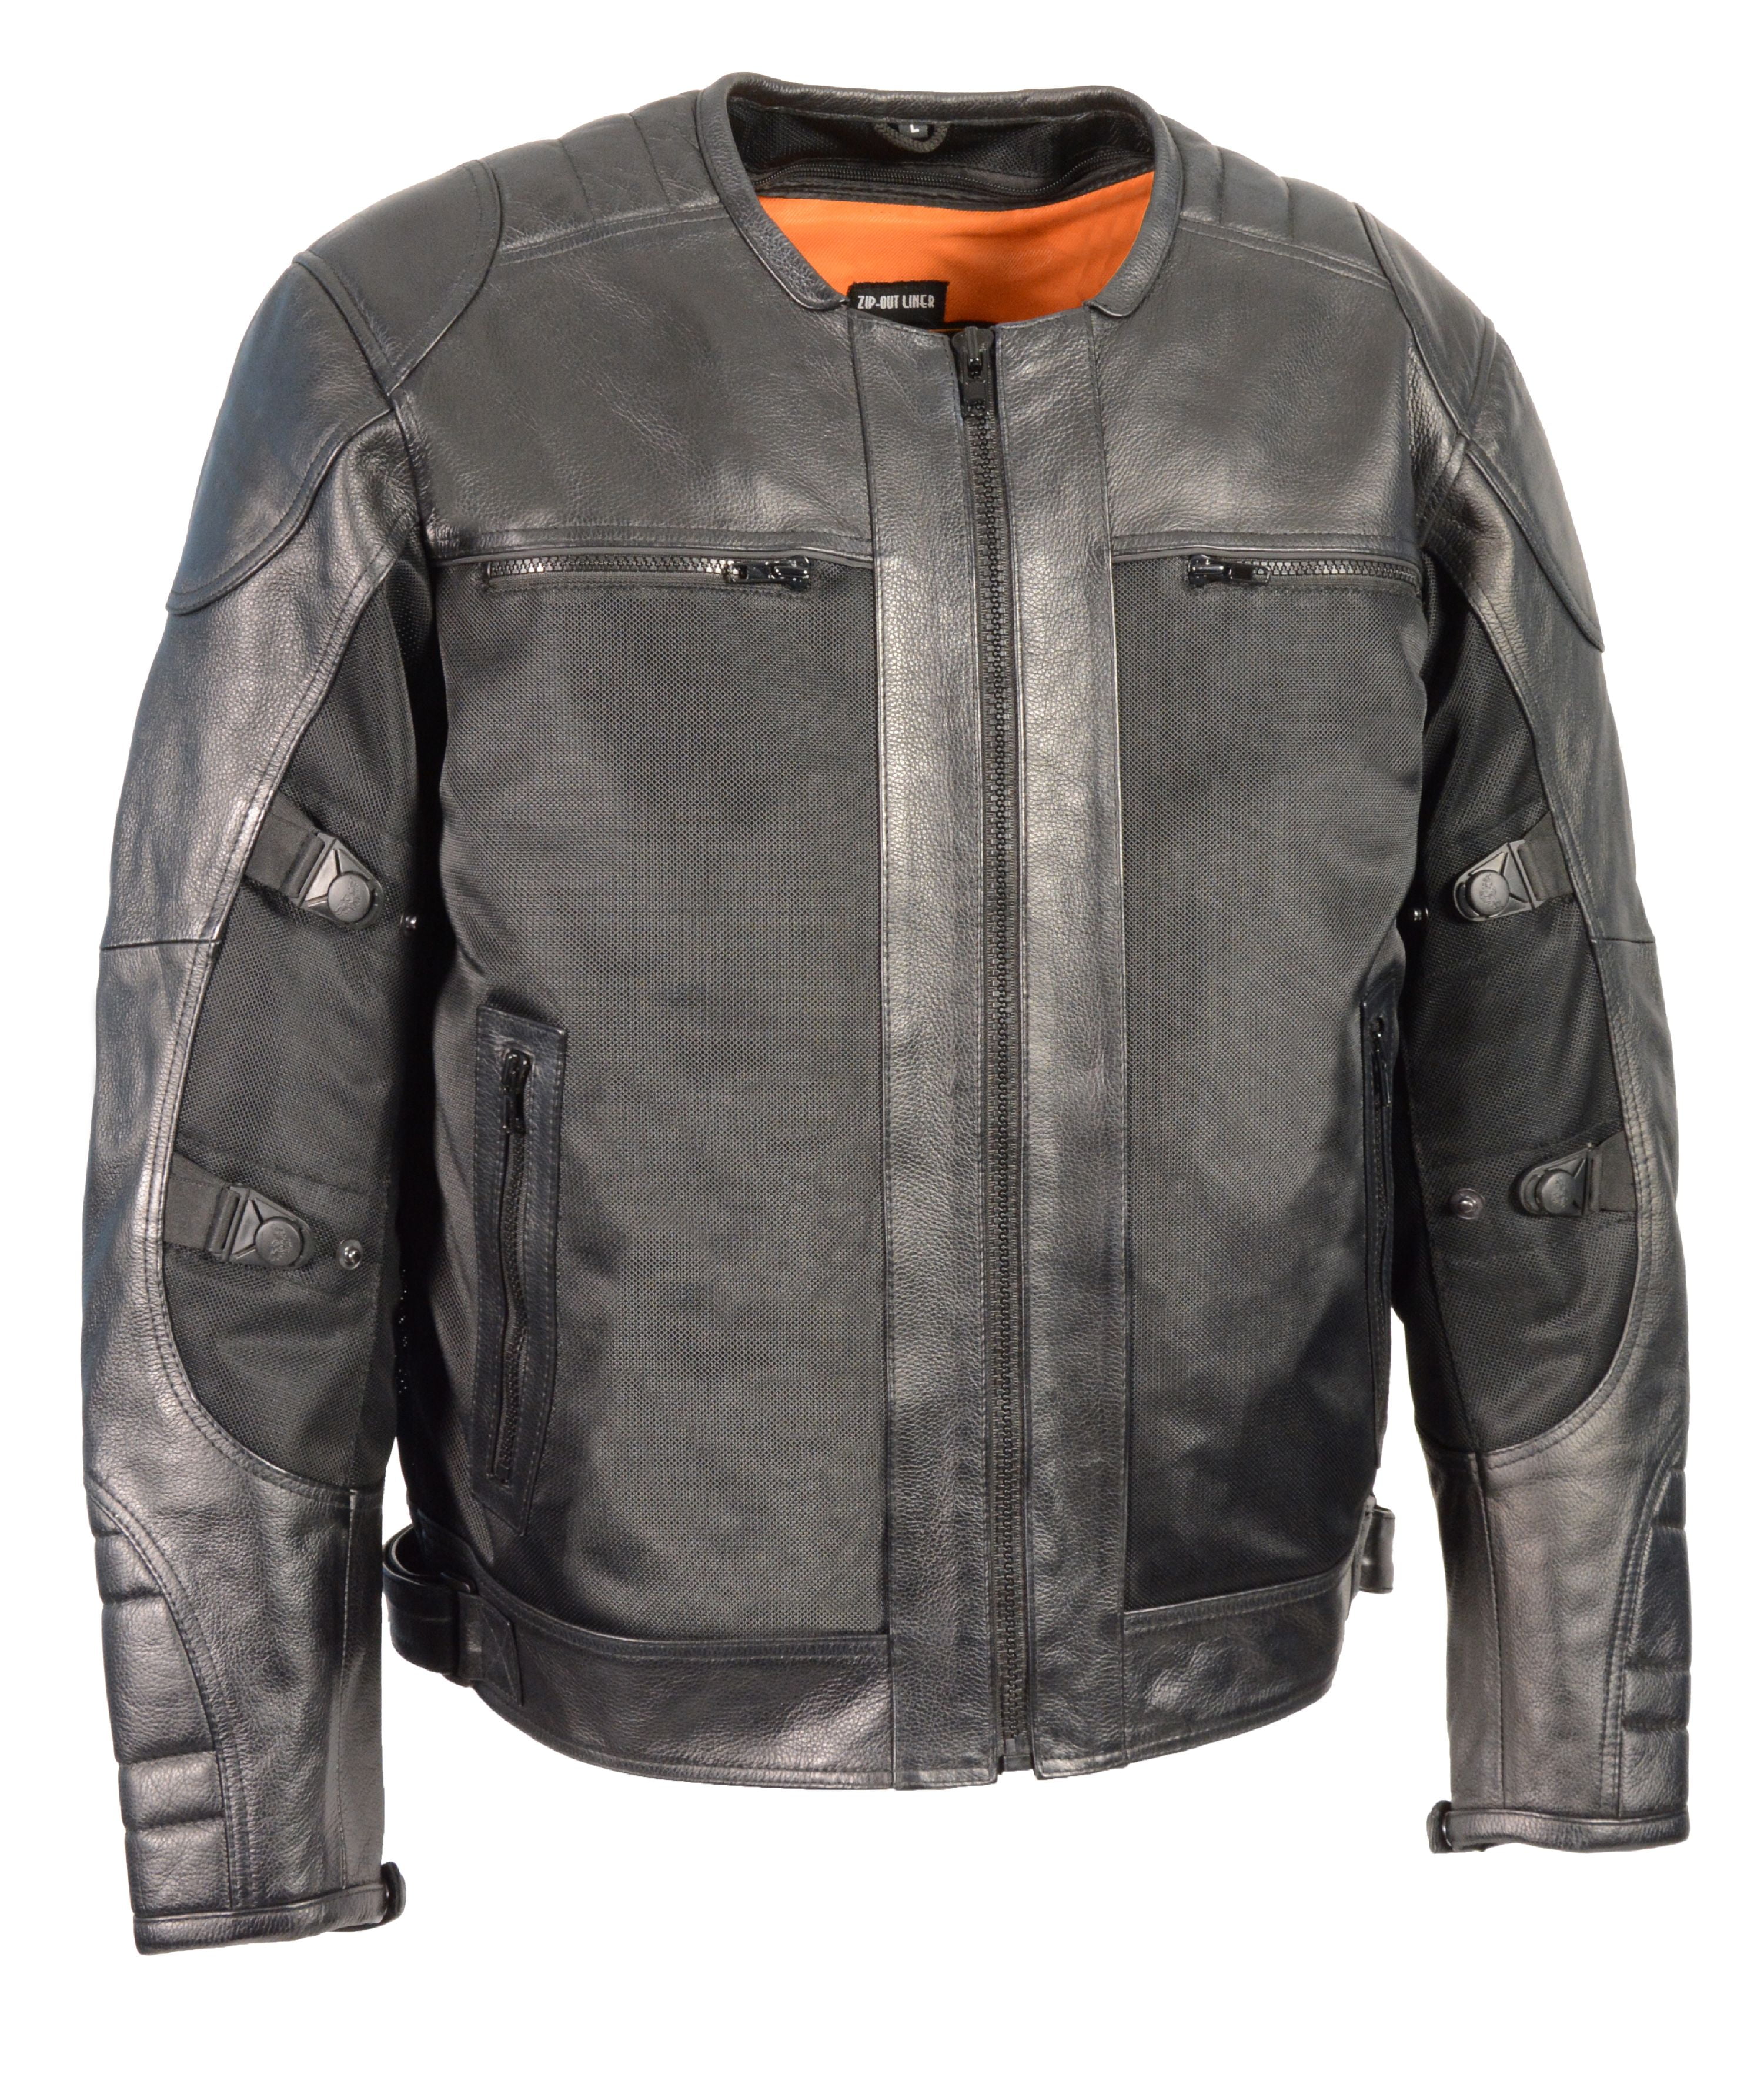 Men's Leather & Mesh Racer Jacket w/ Removable Rain Jacket Liner ...